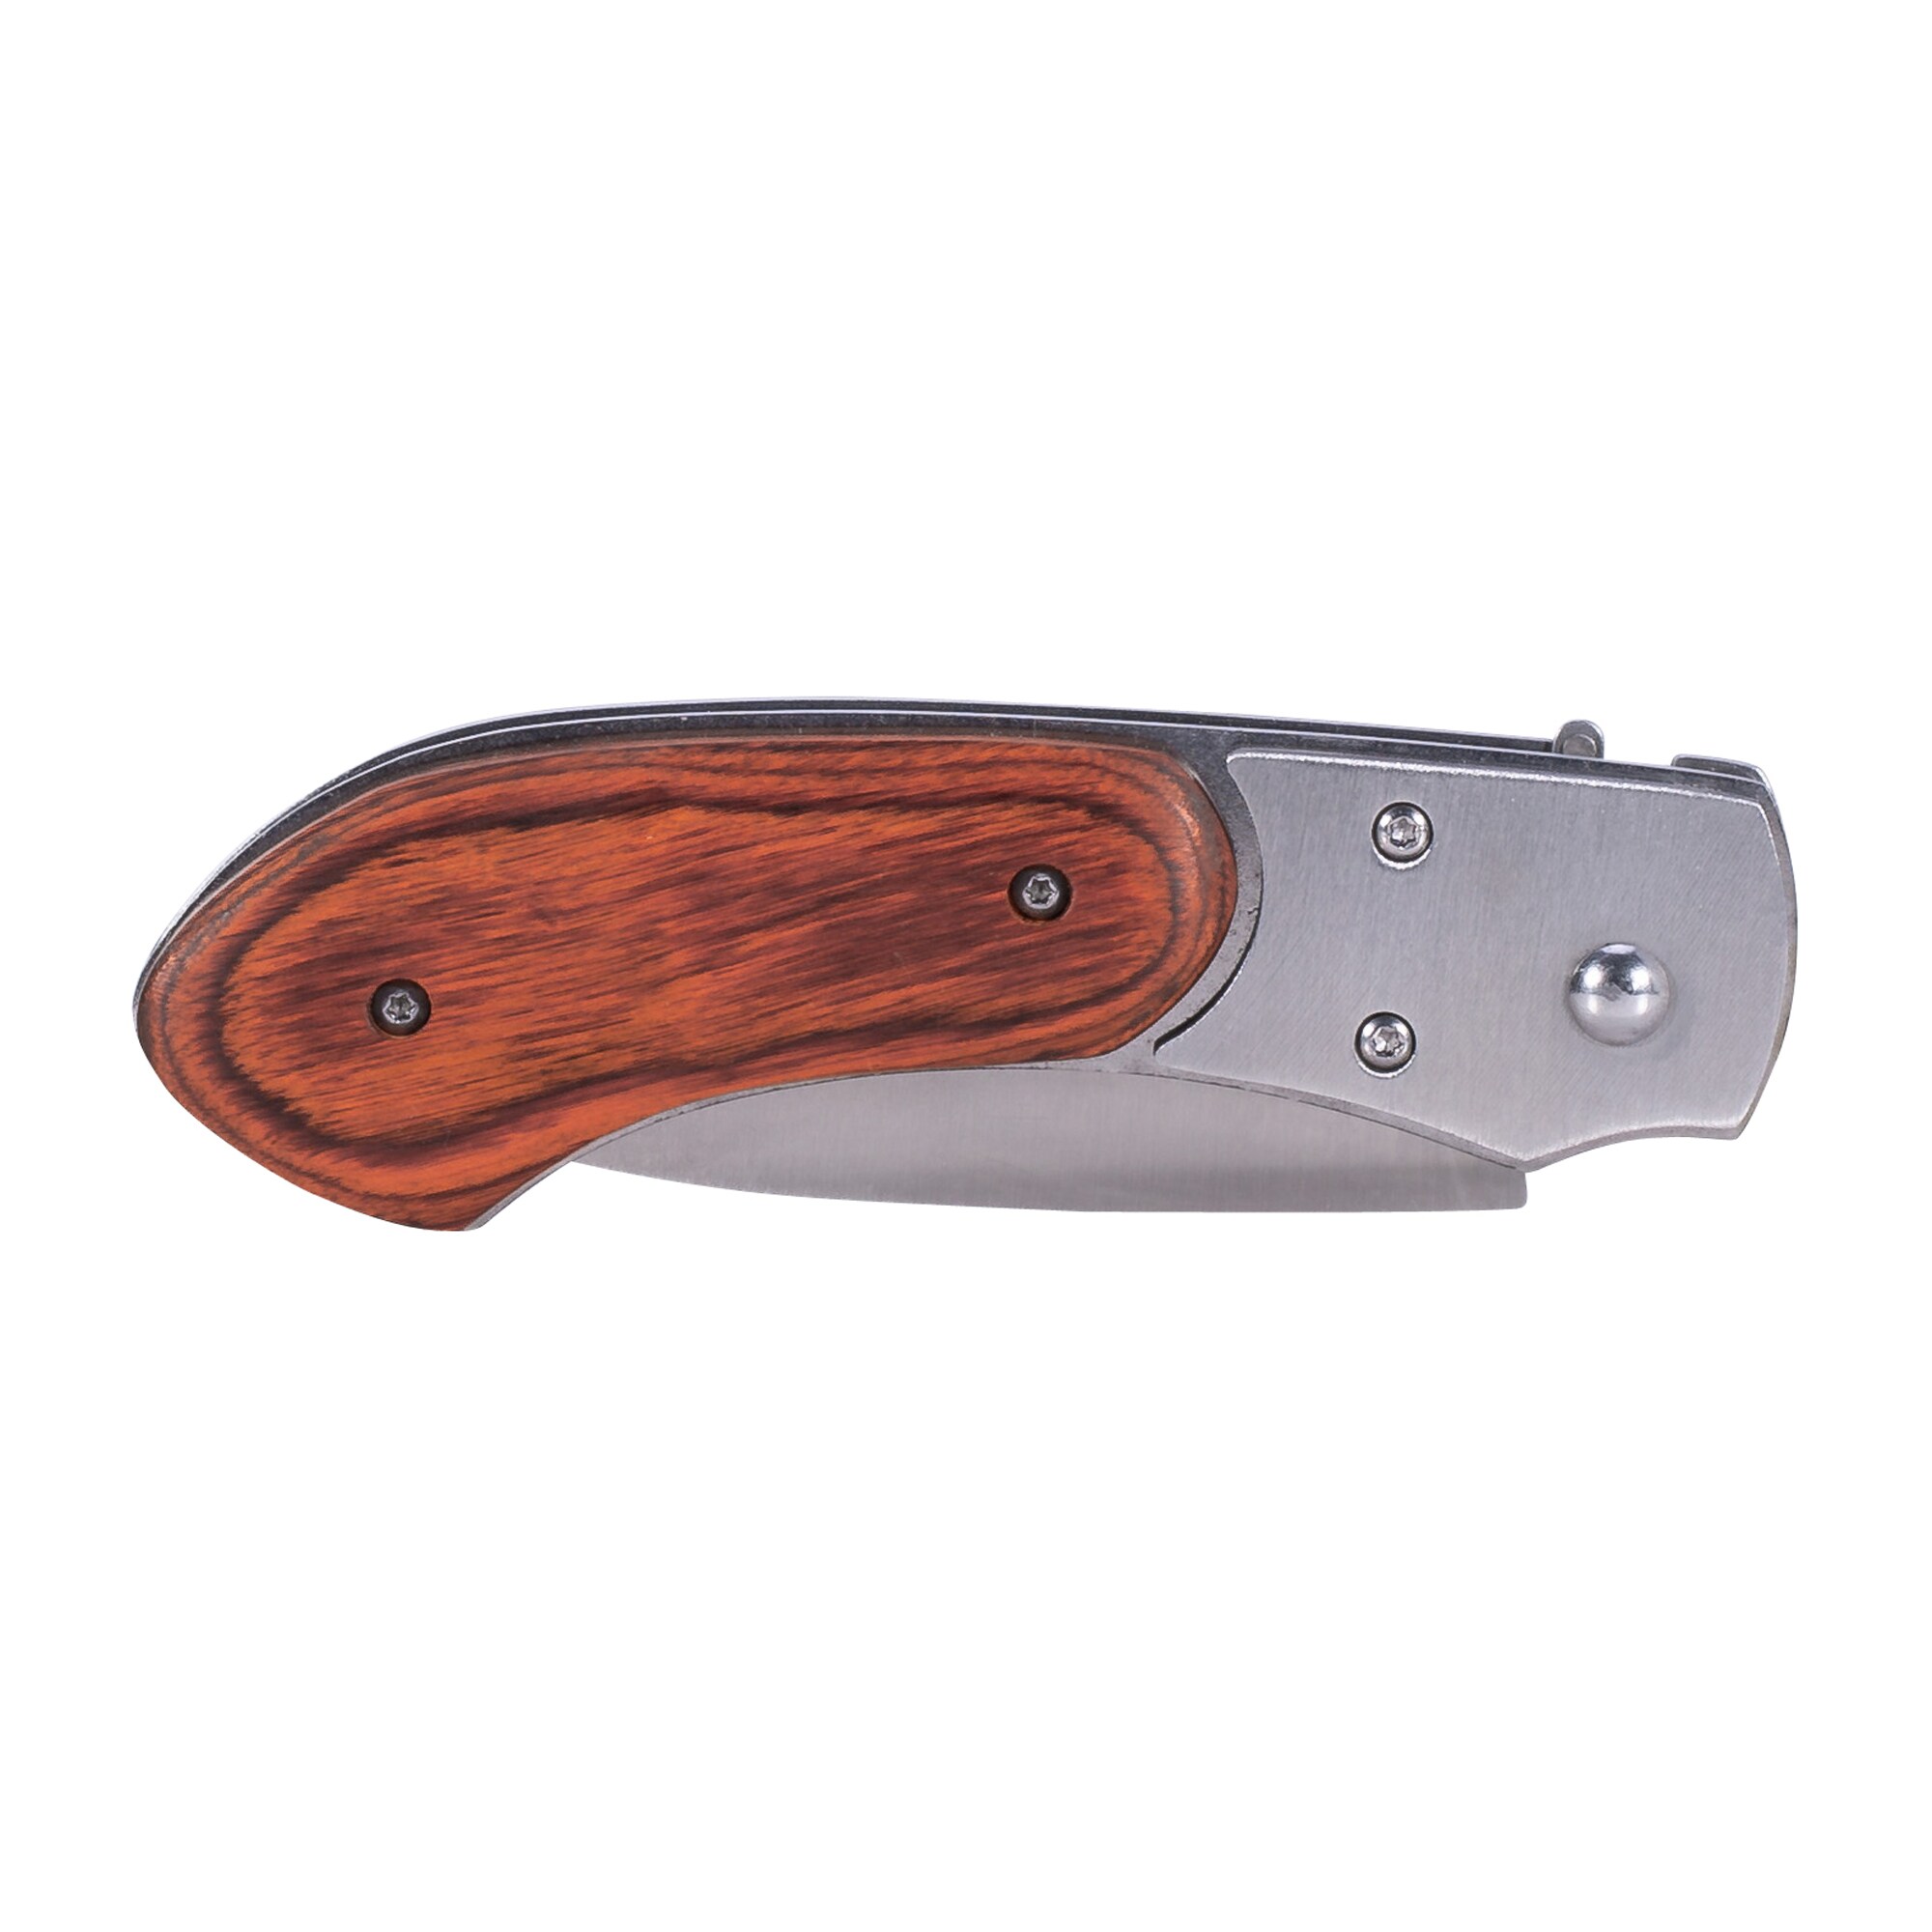 Herbertz Knives Ceramic pocket knife, wooden grip, No. 223810